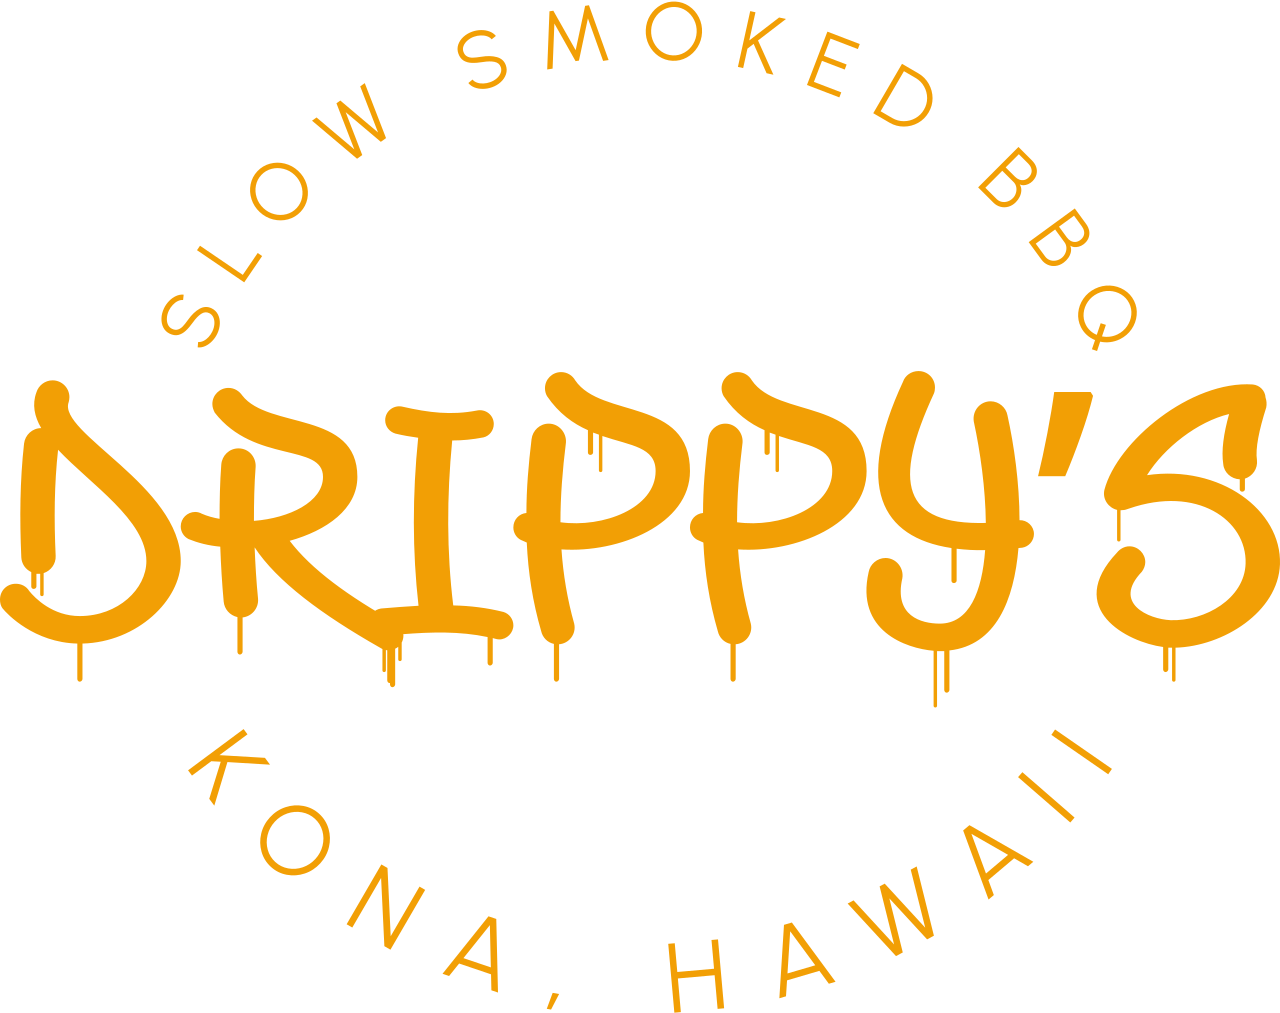 Drippy’s's logo